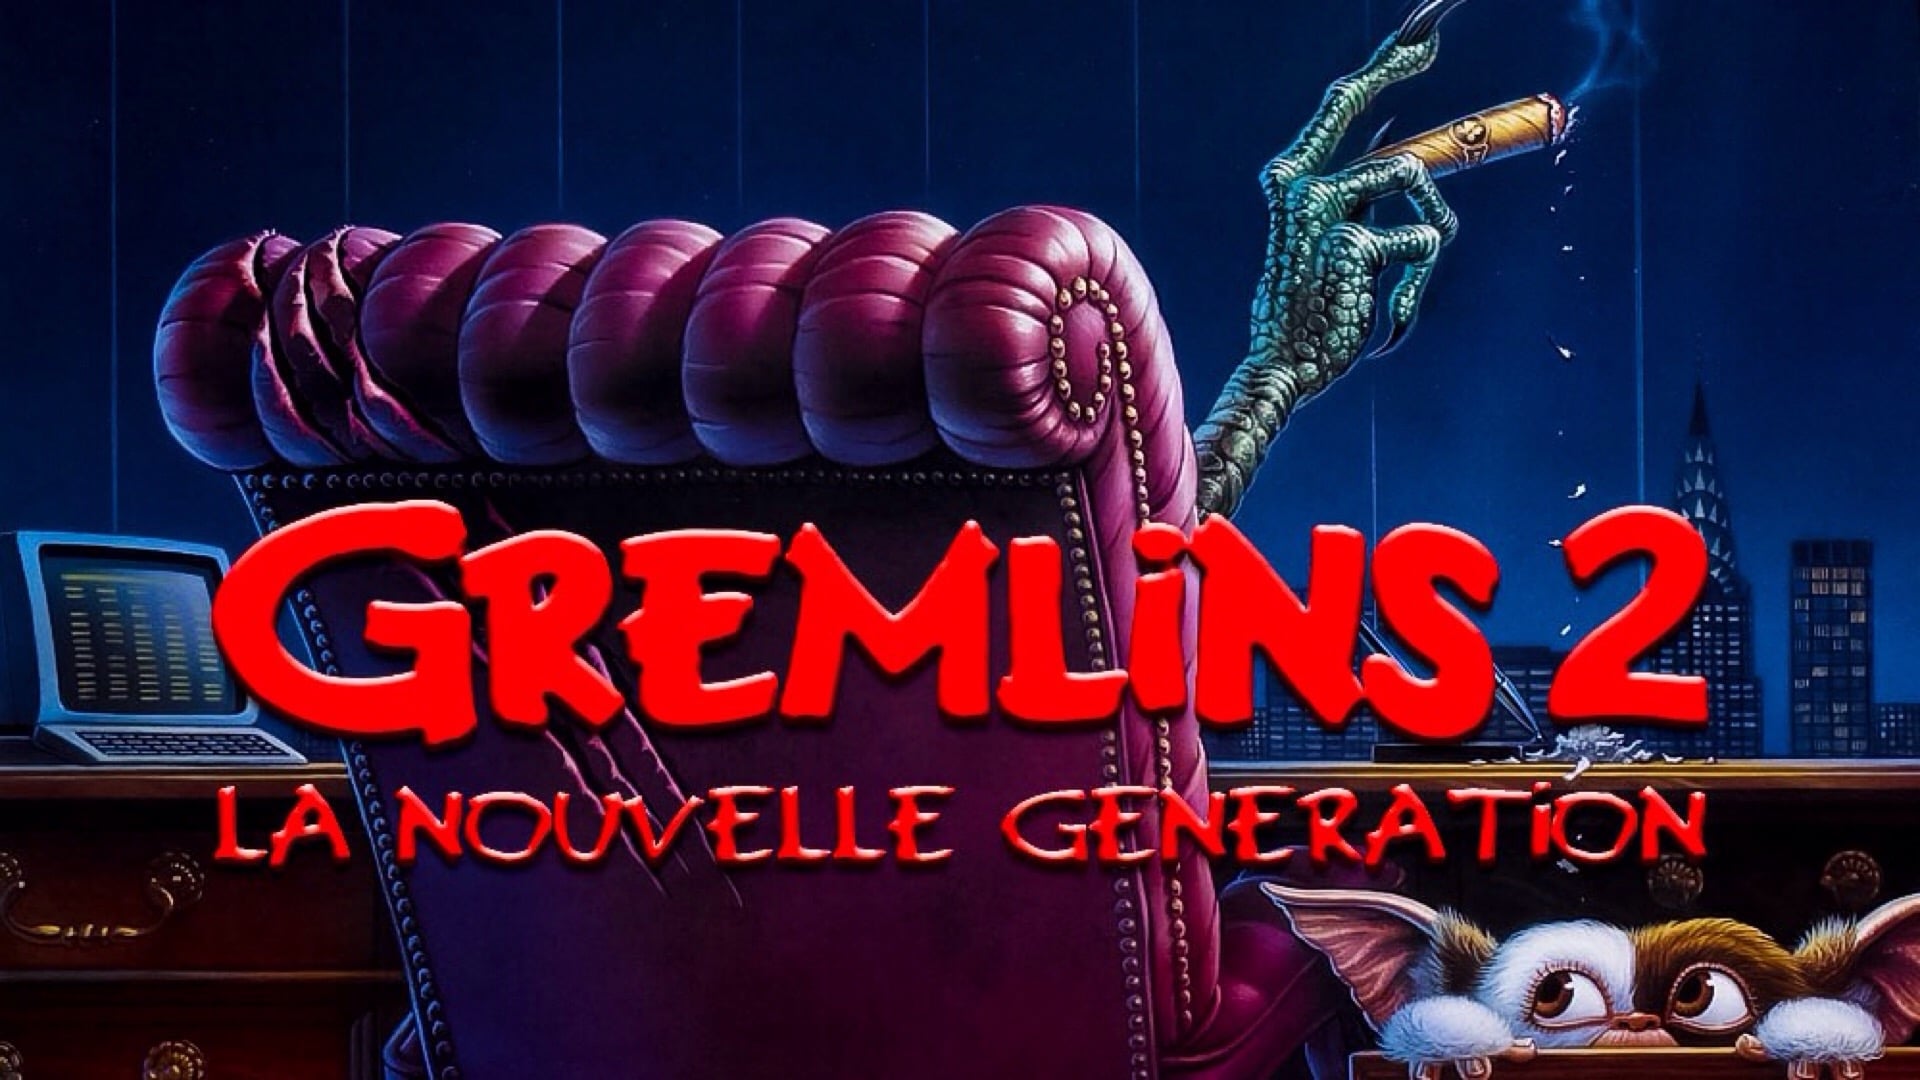 Image du film Gremlins 2, la nouvelle génération 3weycutxbw13tomeplluy46tw1sjpg